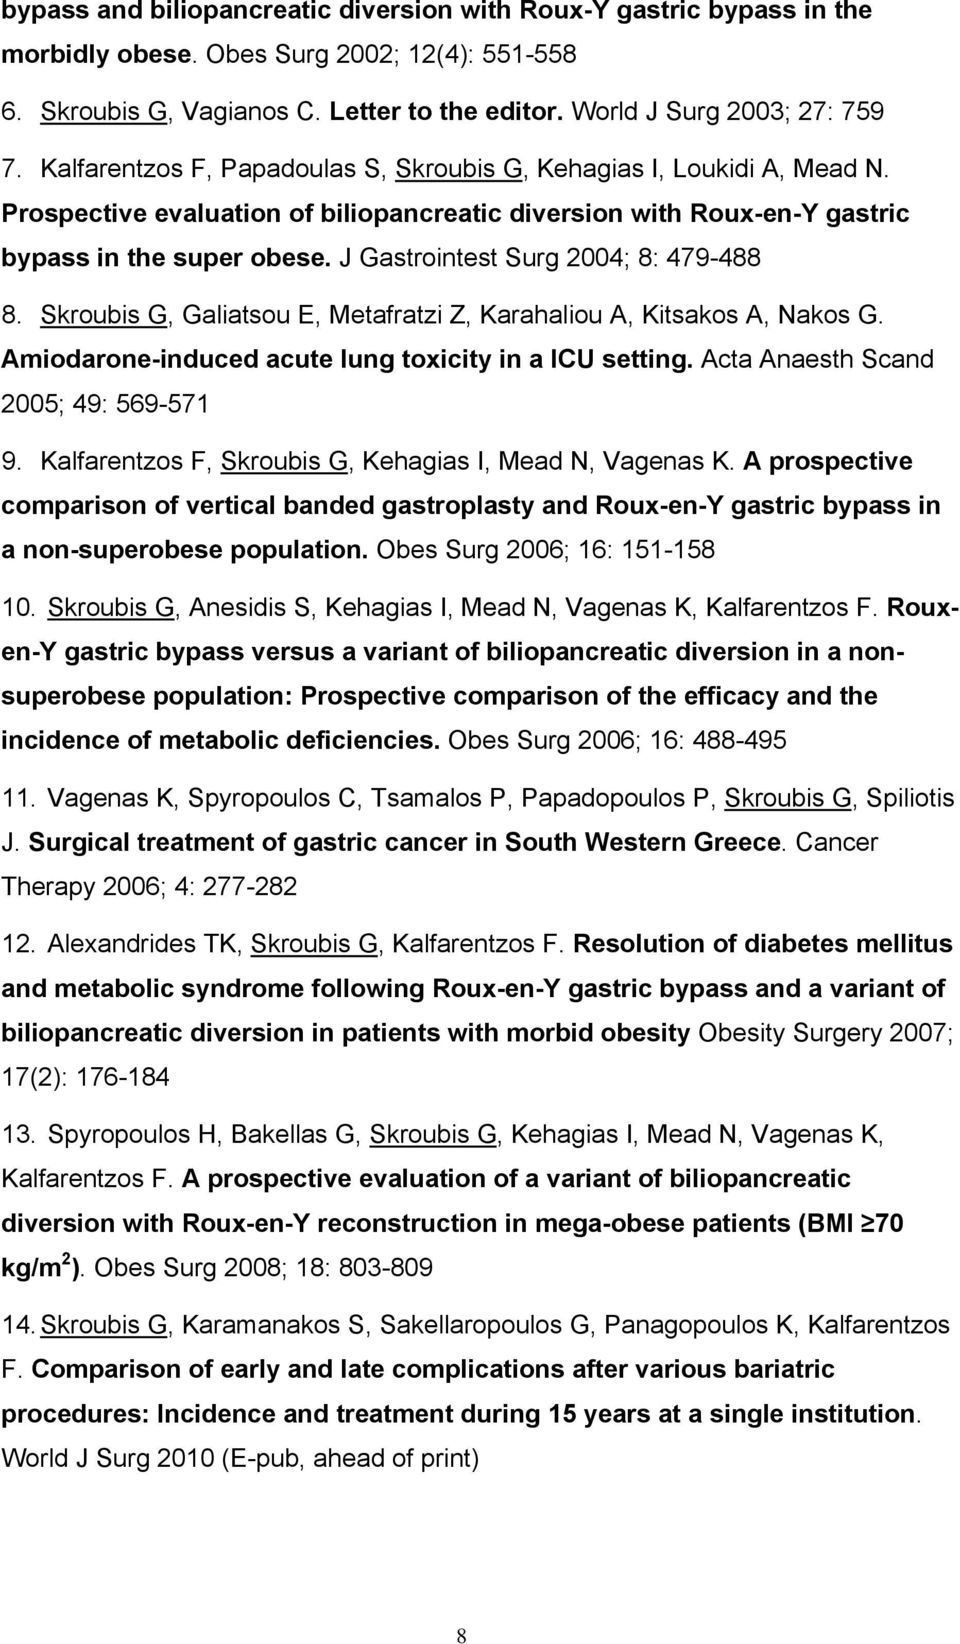 J Gastrointest Surg 2004; 8: 479-488 8. Skroubis G, Galiatsou E, Metafratzi Z, Karahaliou A, Kitsakos A, Nakos G. Amiodarone-induced acute lung toxicity in a ICU setting.